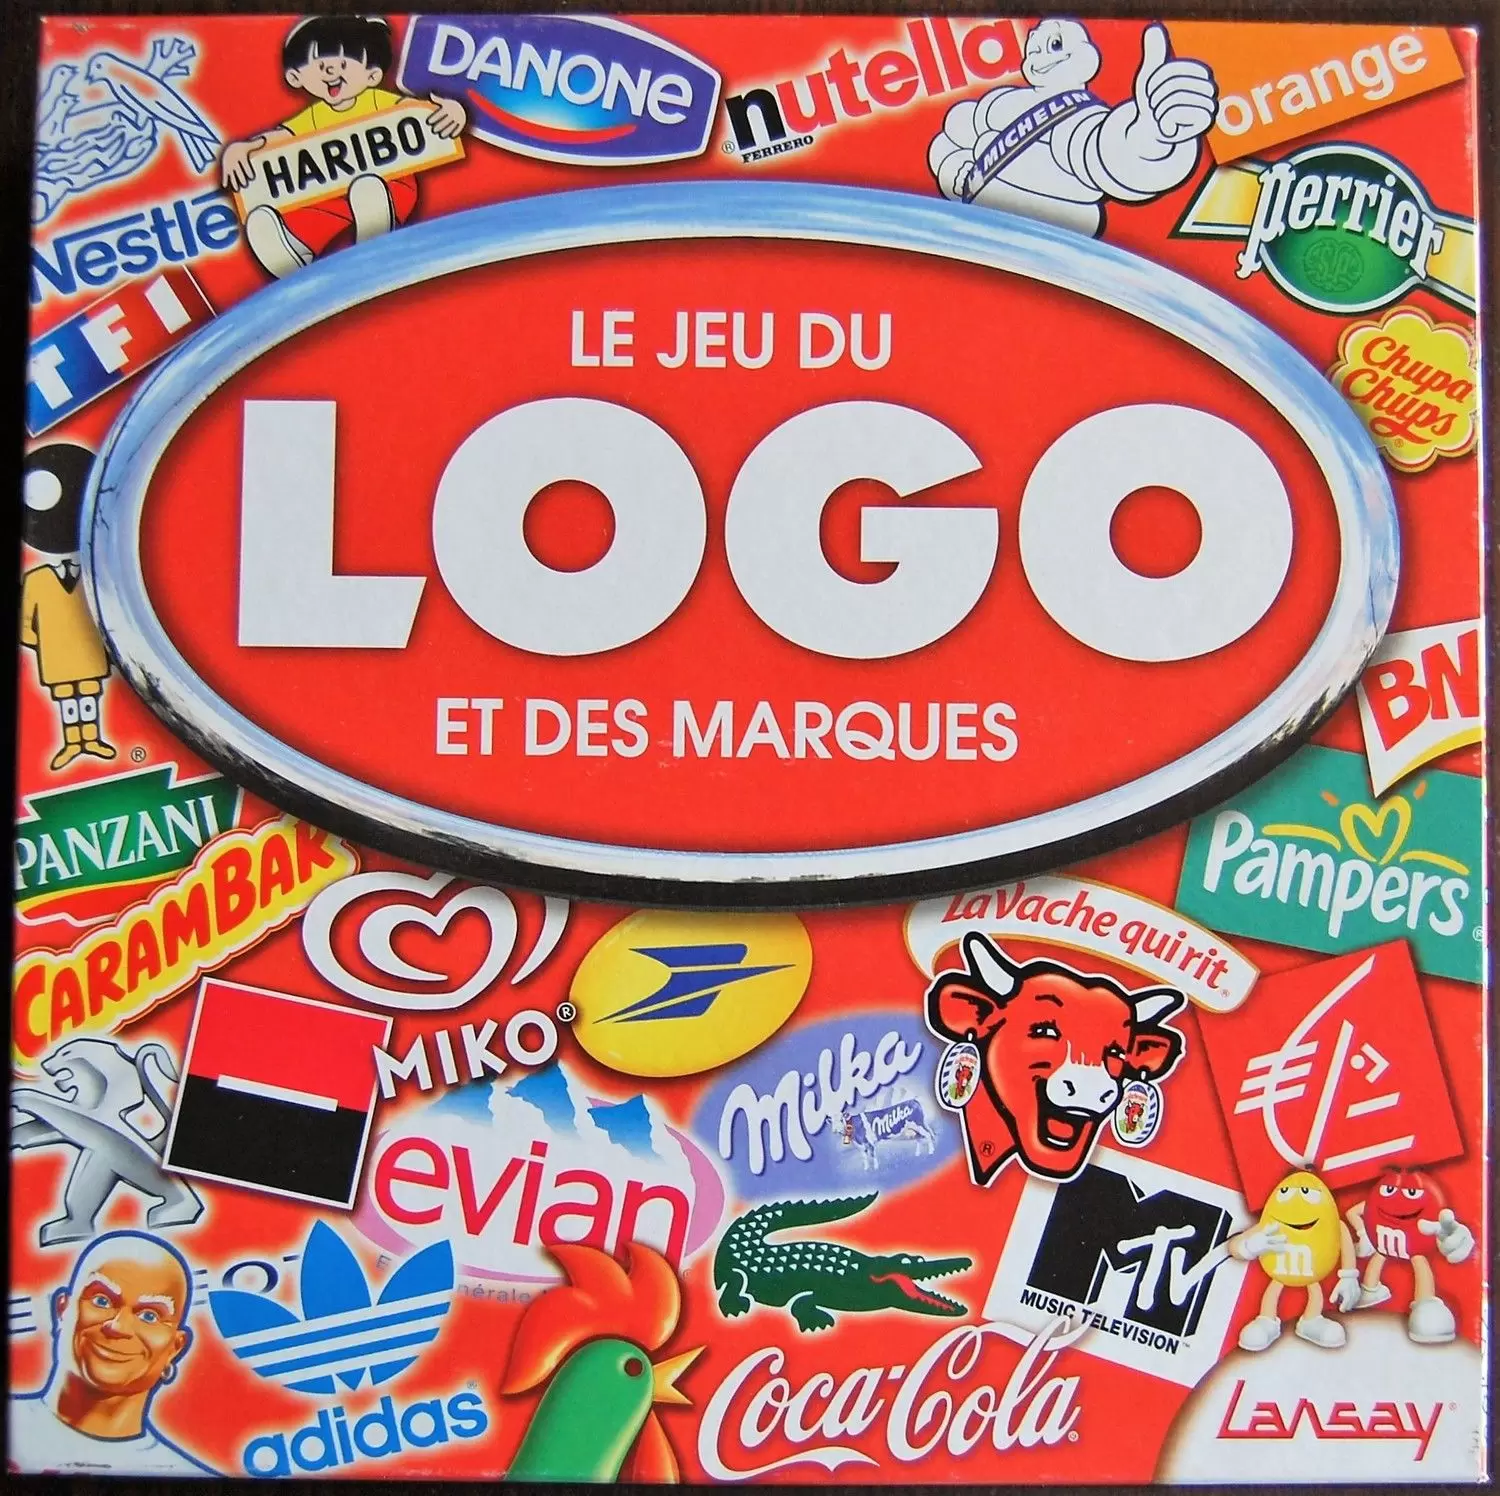 Lansay - Le Jeu du Logo